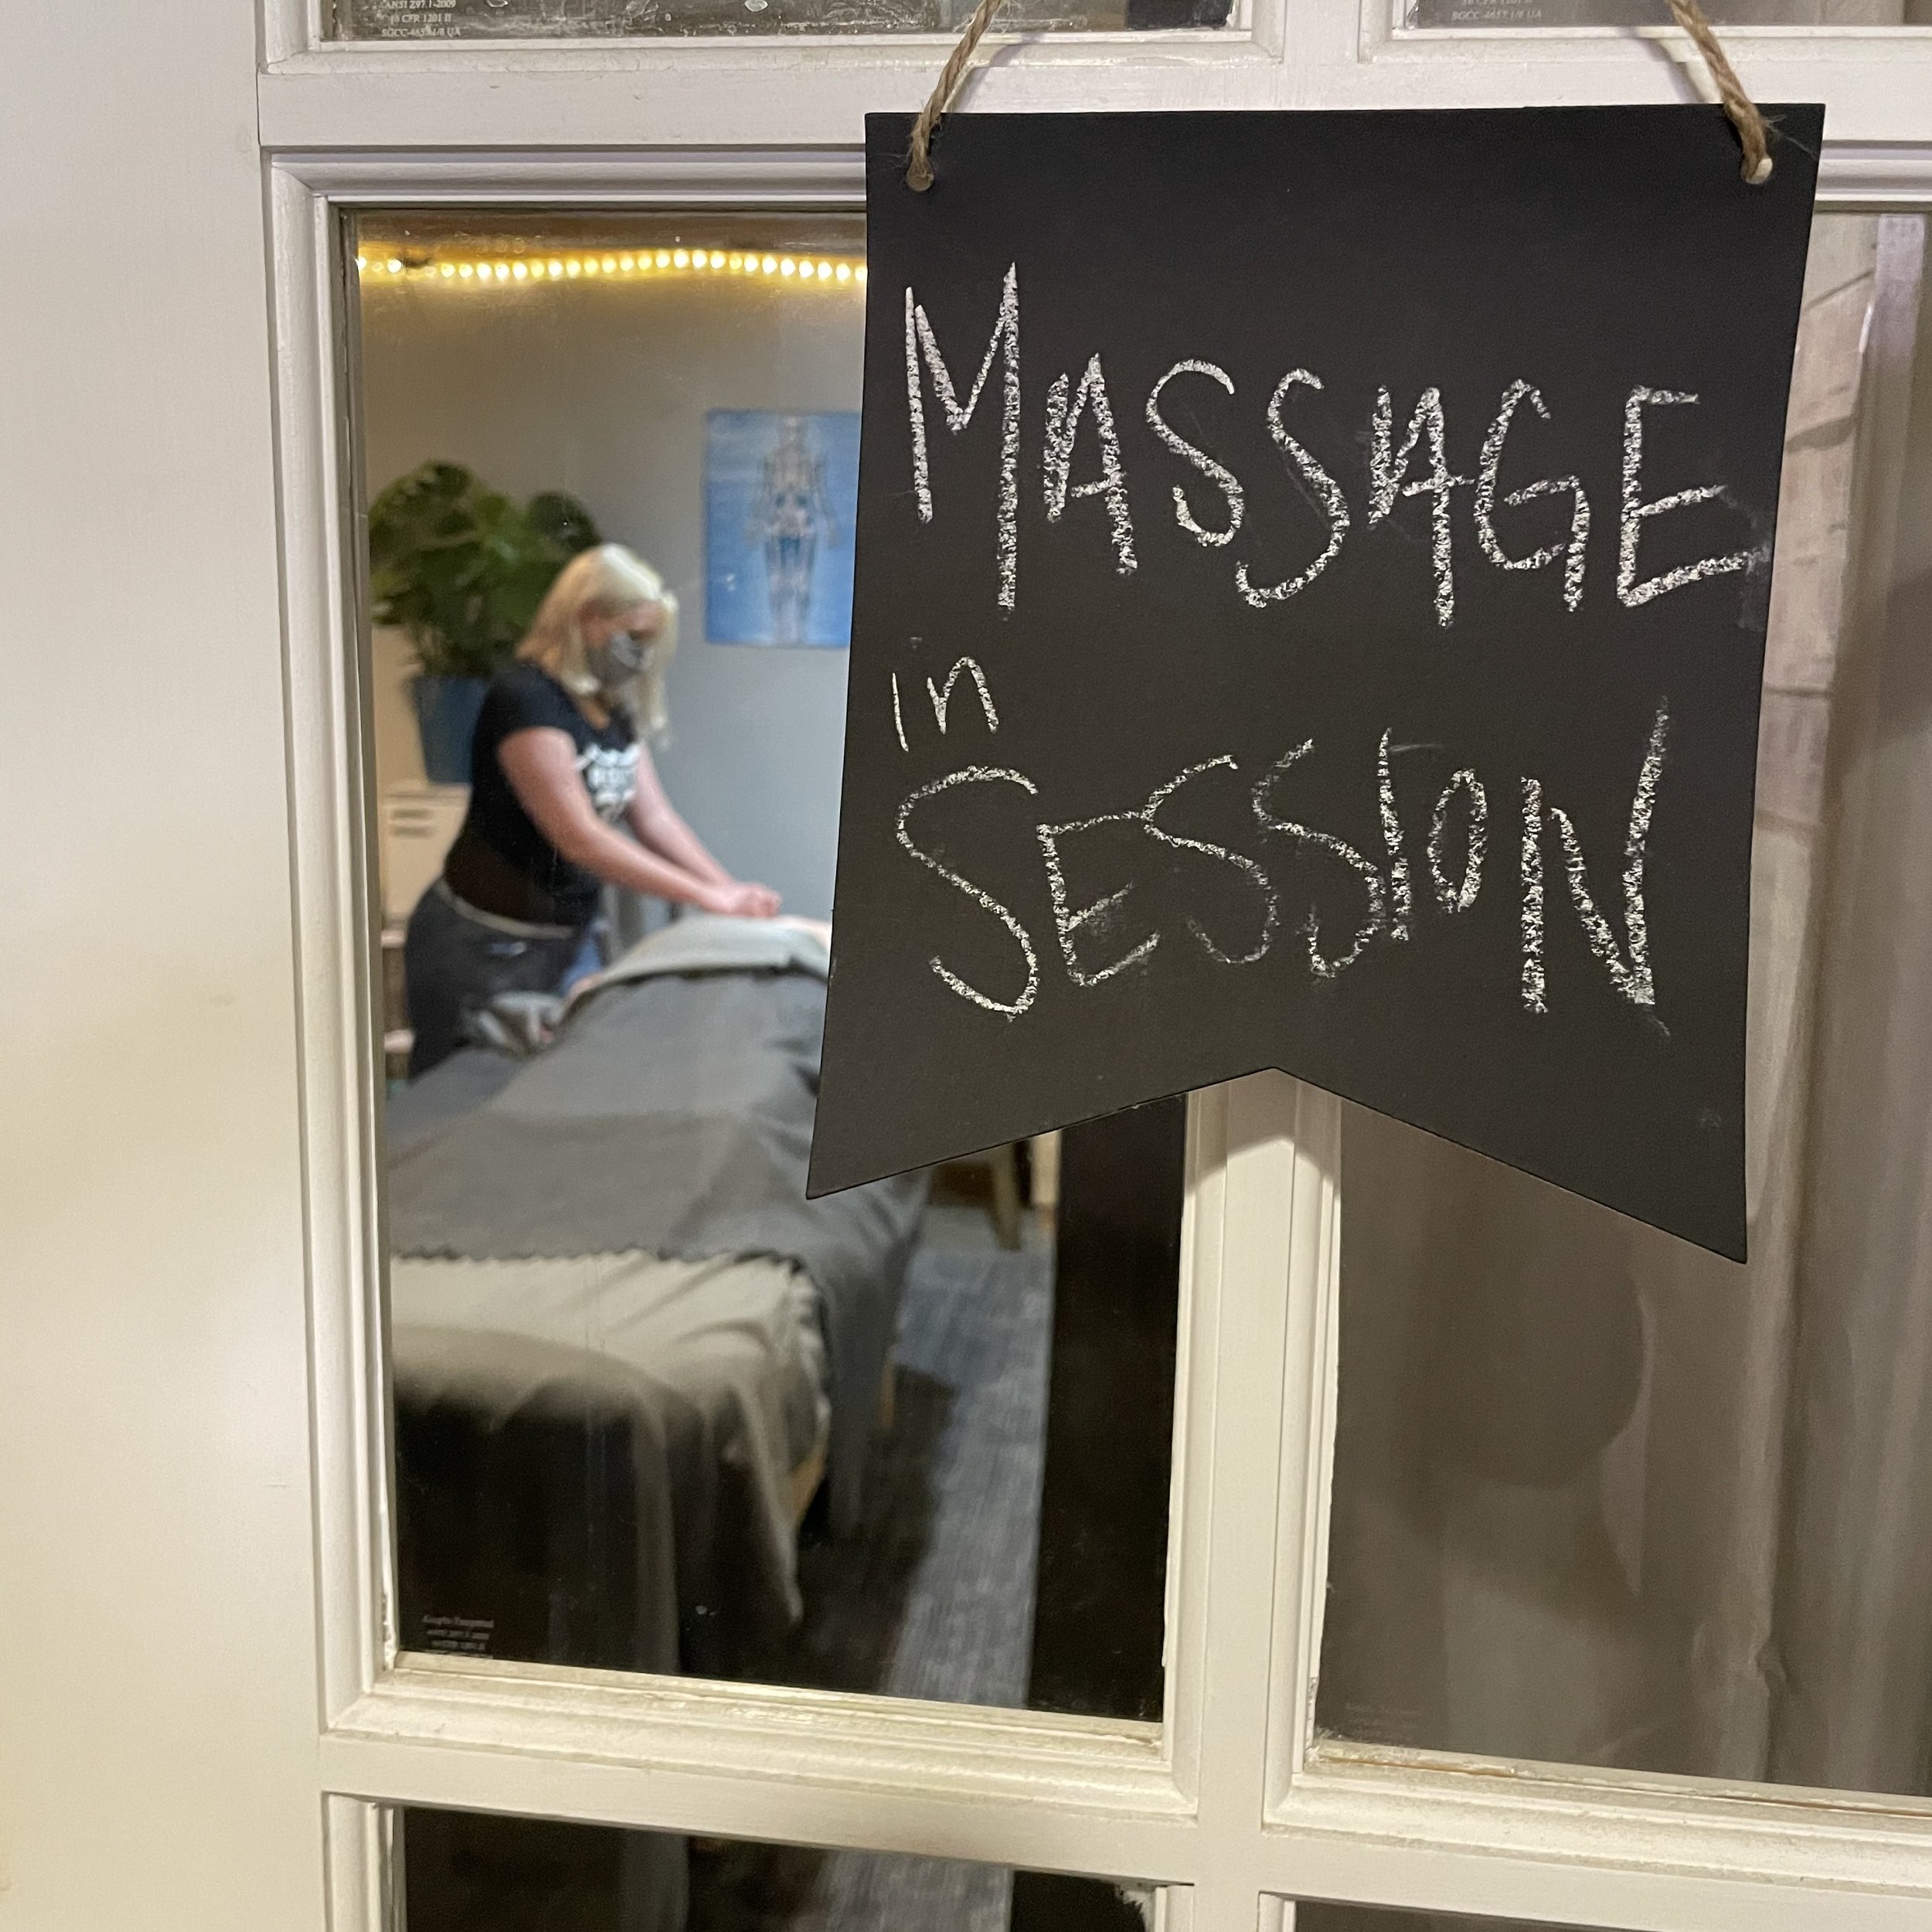 Massage In Session Photo.jpg